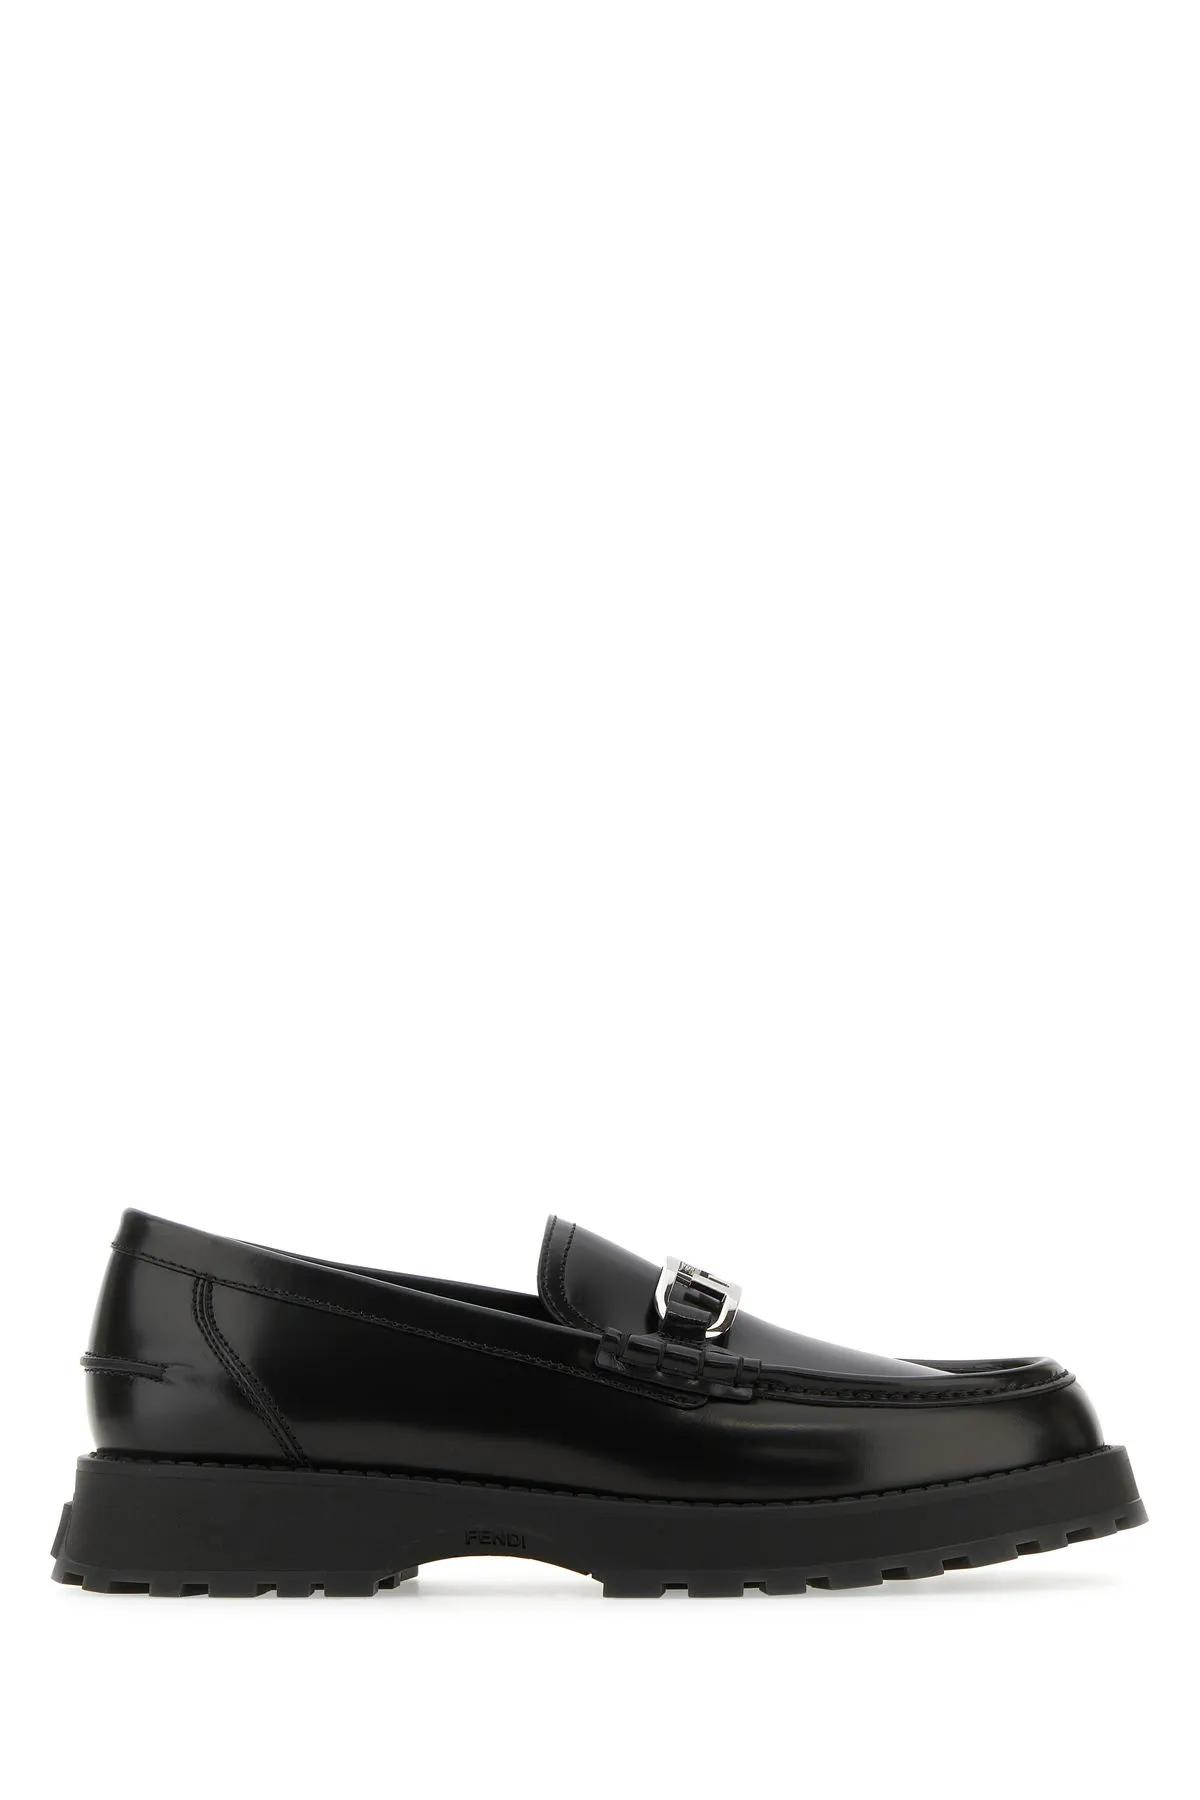 Fendi Black Leather Oclock Loafers